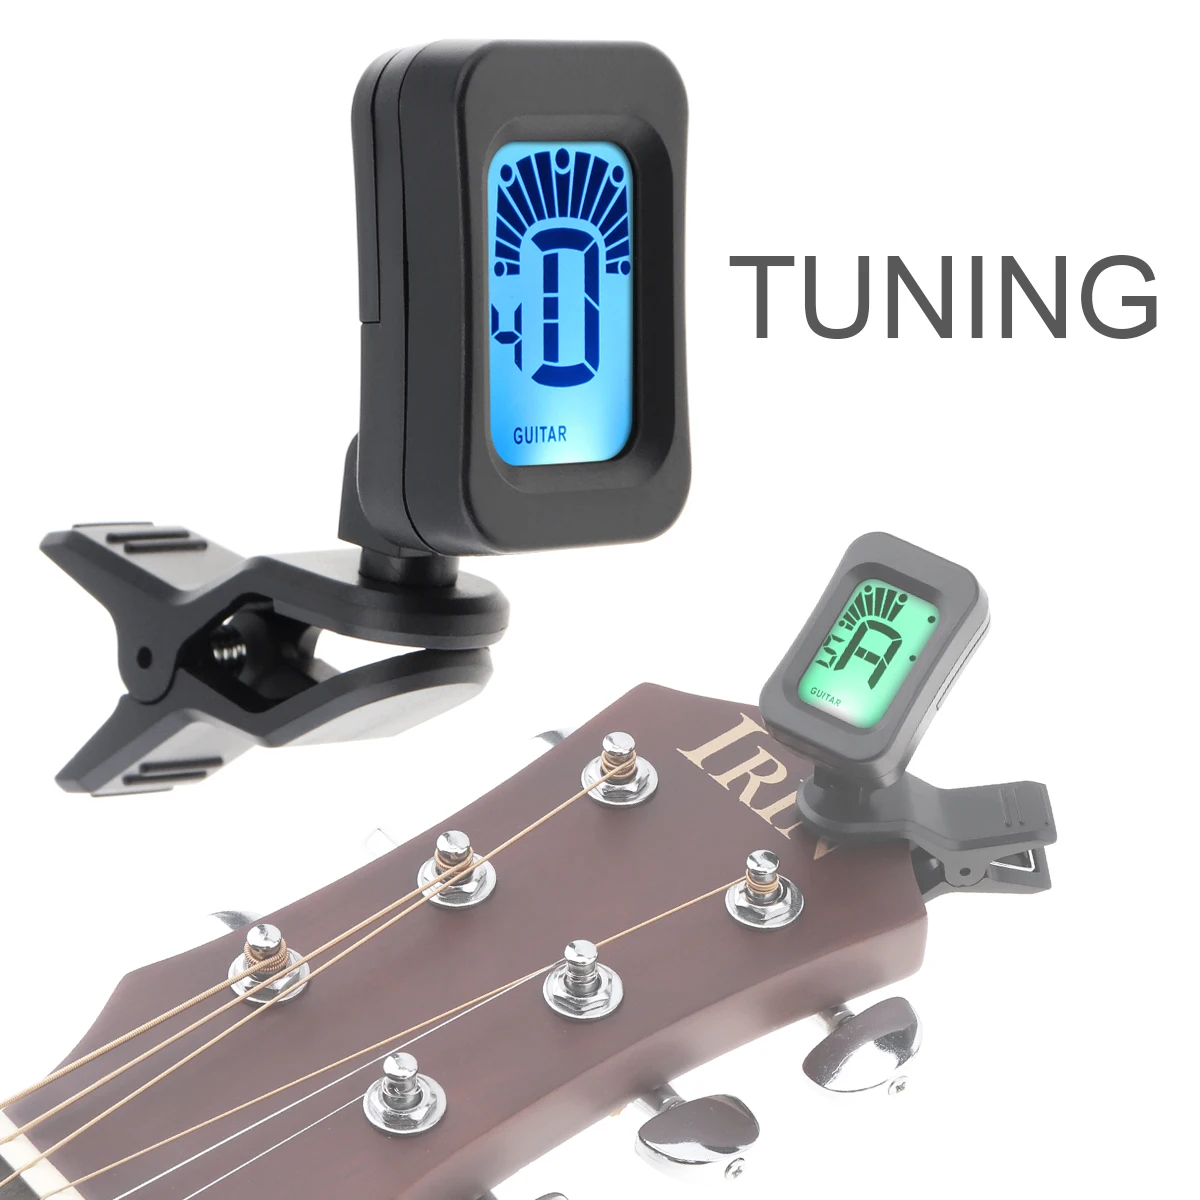 360 Degree Rotatable Guitar Tuner Portable Universal LCD Display Digital Tuner for Chromatic Guitar / Bass / Ukulele / Violin